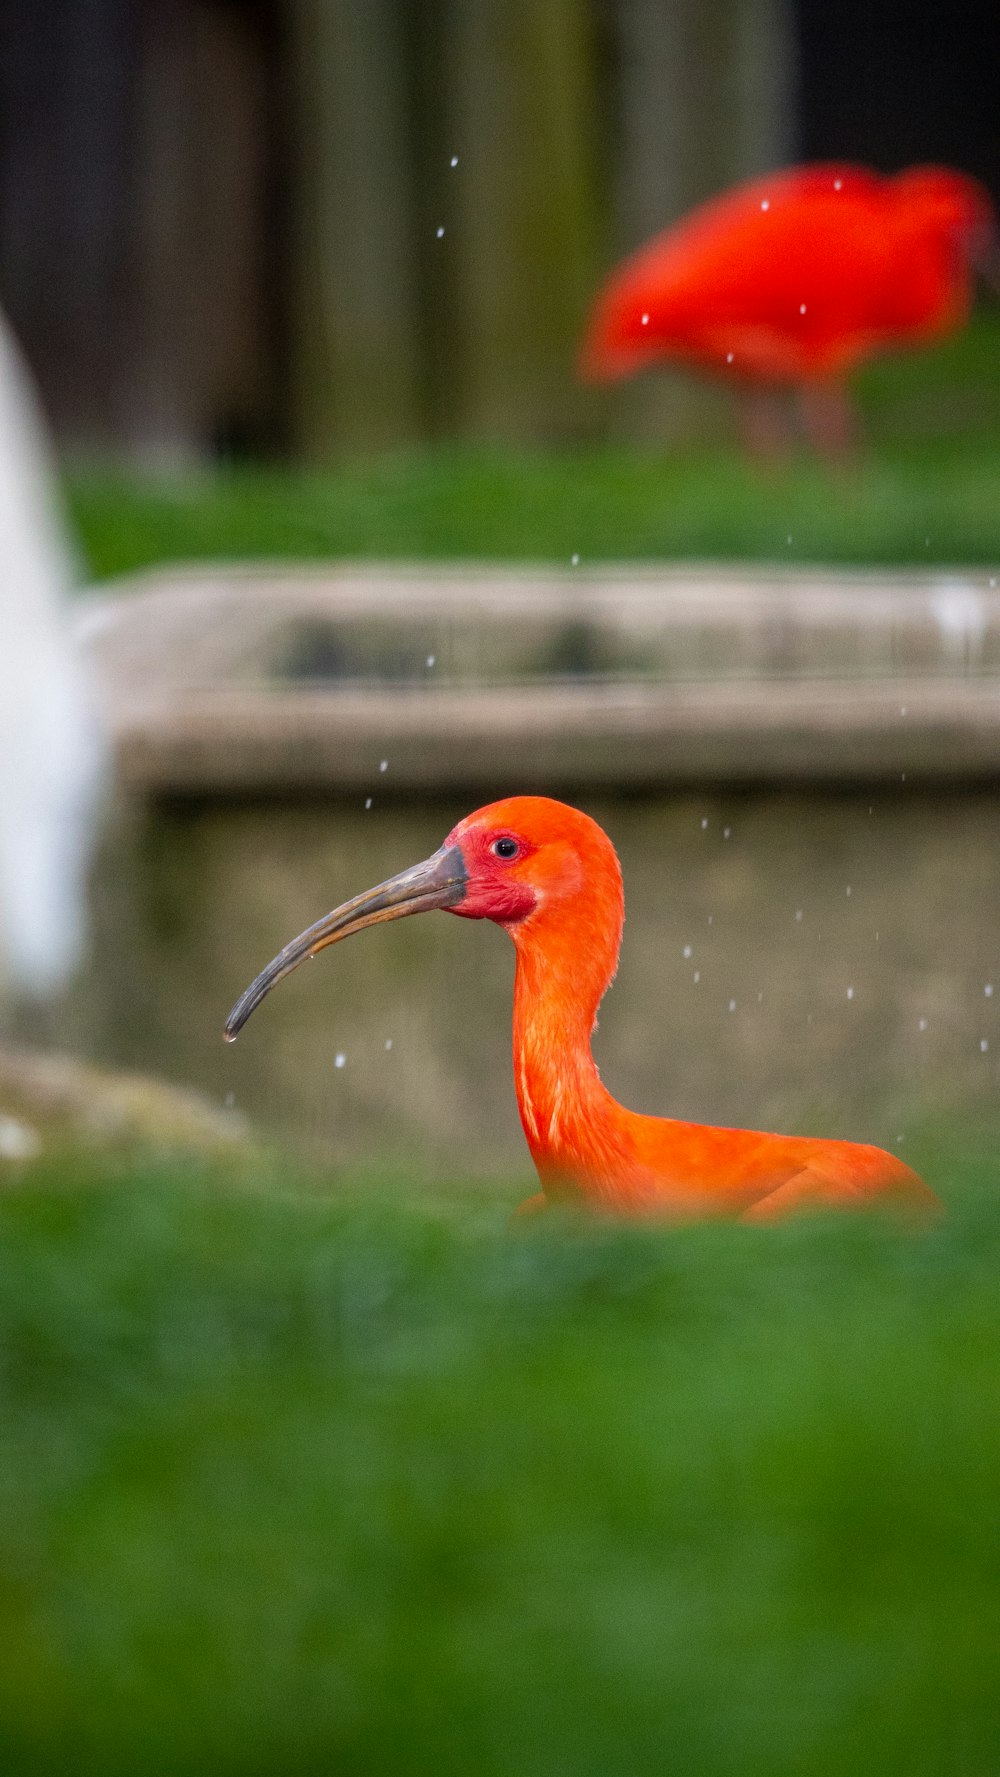 a bright orange bird with a long beak